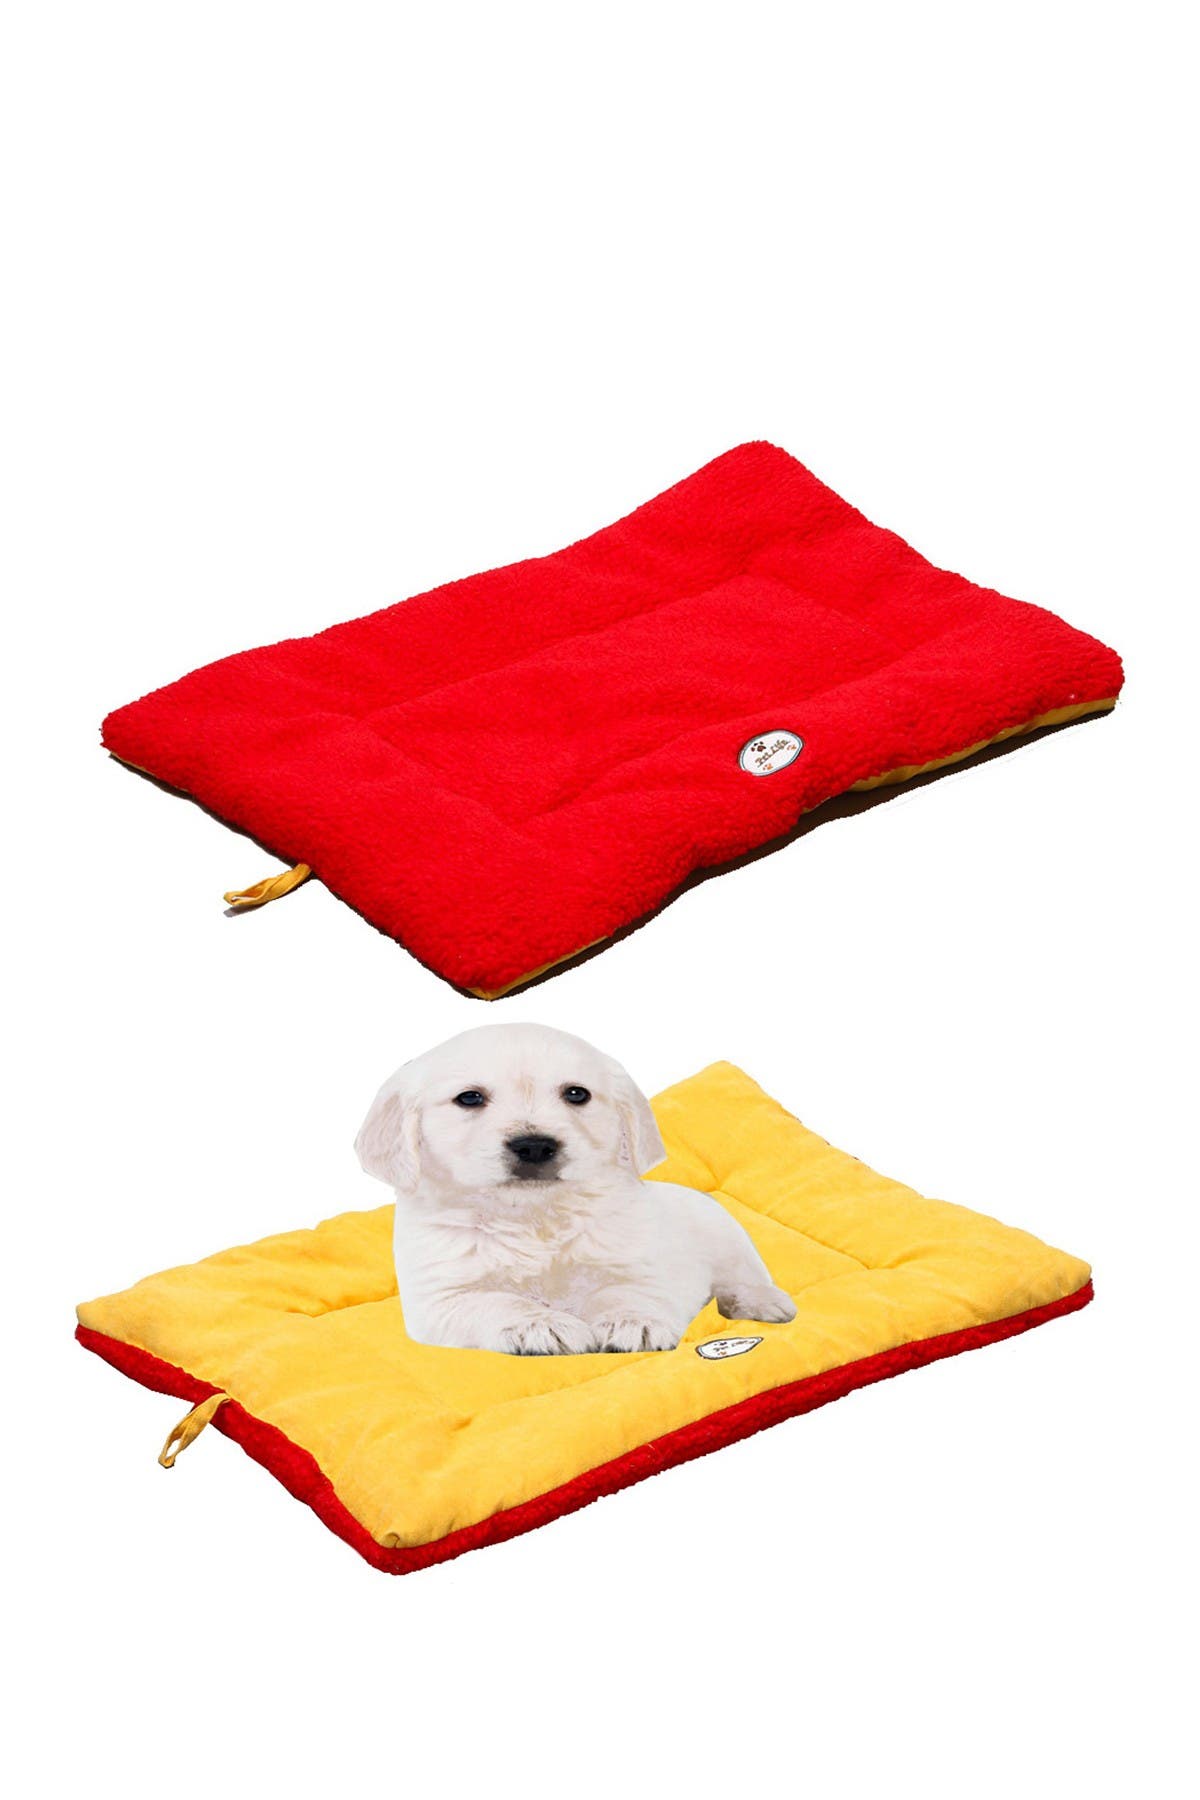 Pet Life Large Orange/red Eco-paw Reversible Eco-friendly Pet Bed